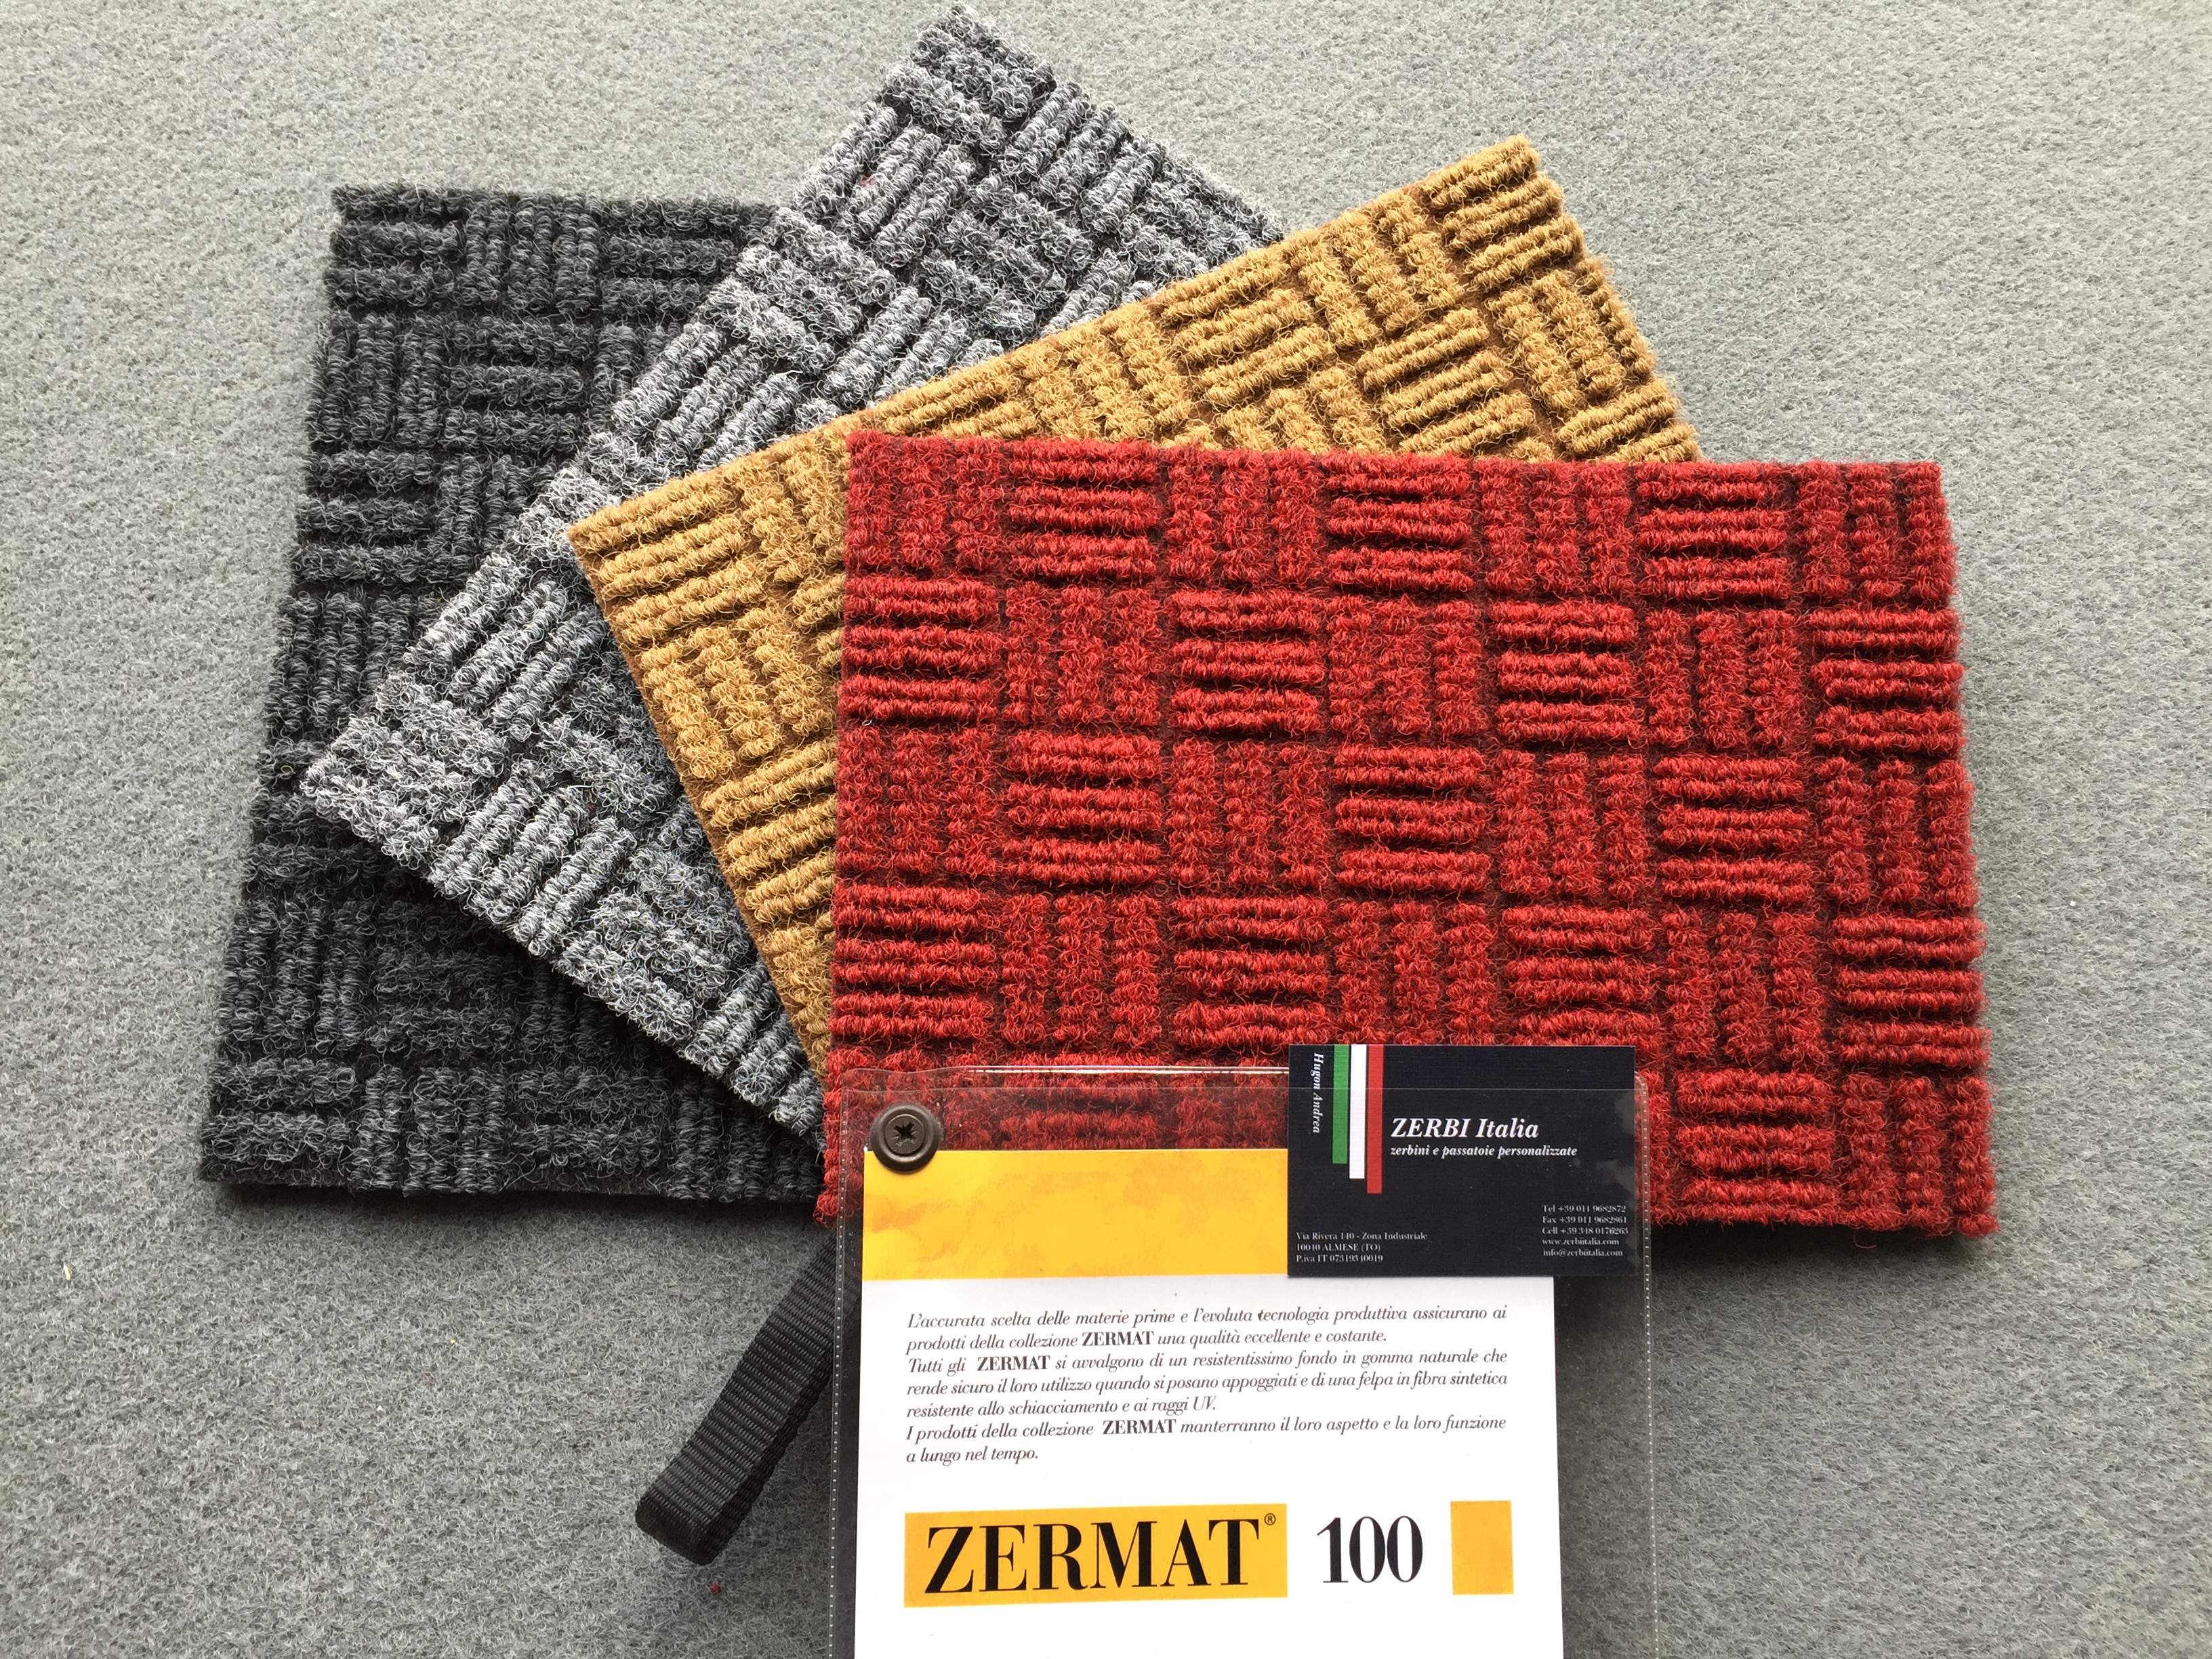 Zermat 100 - ZERBINI PERSONALIZZATI